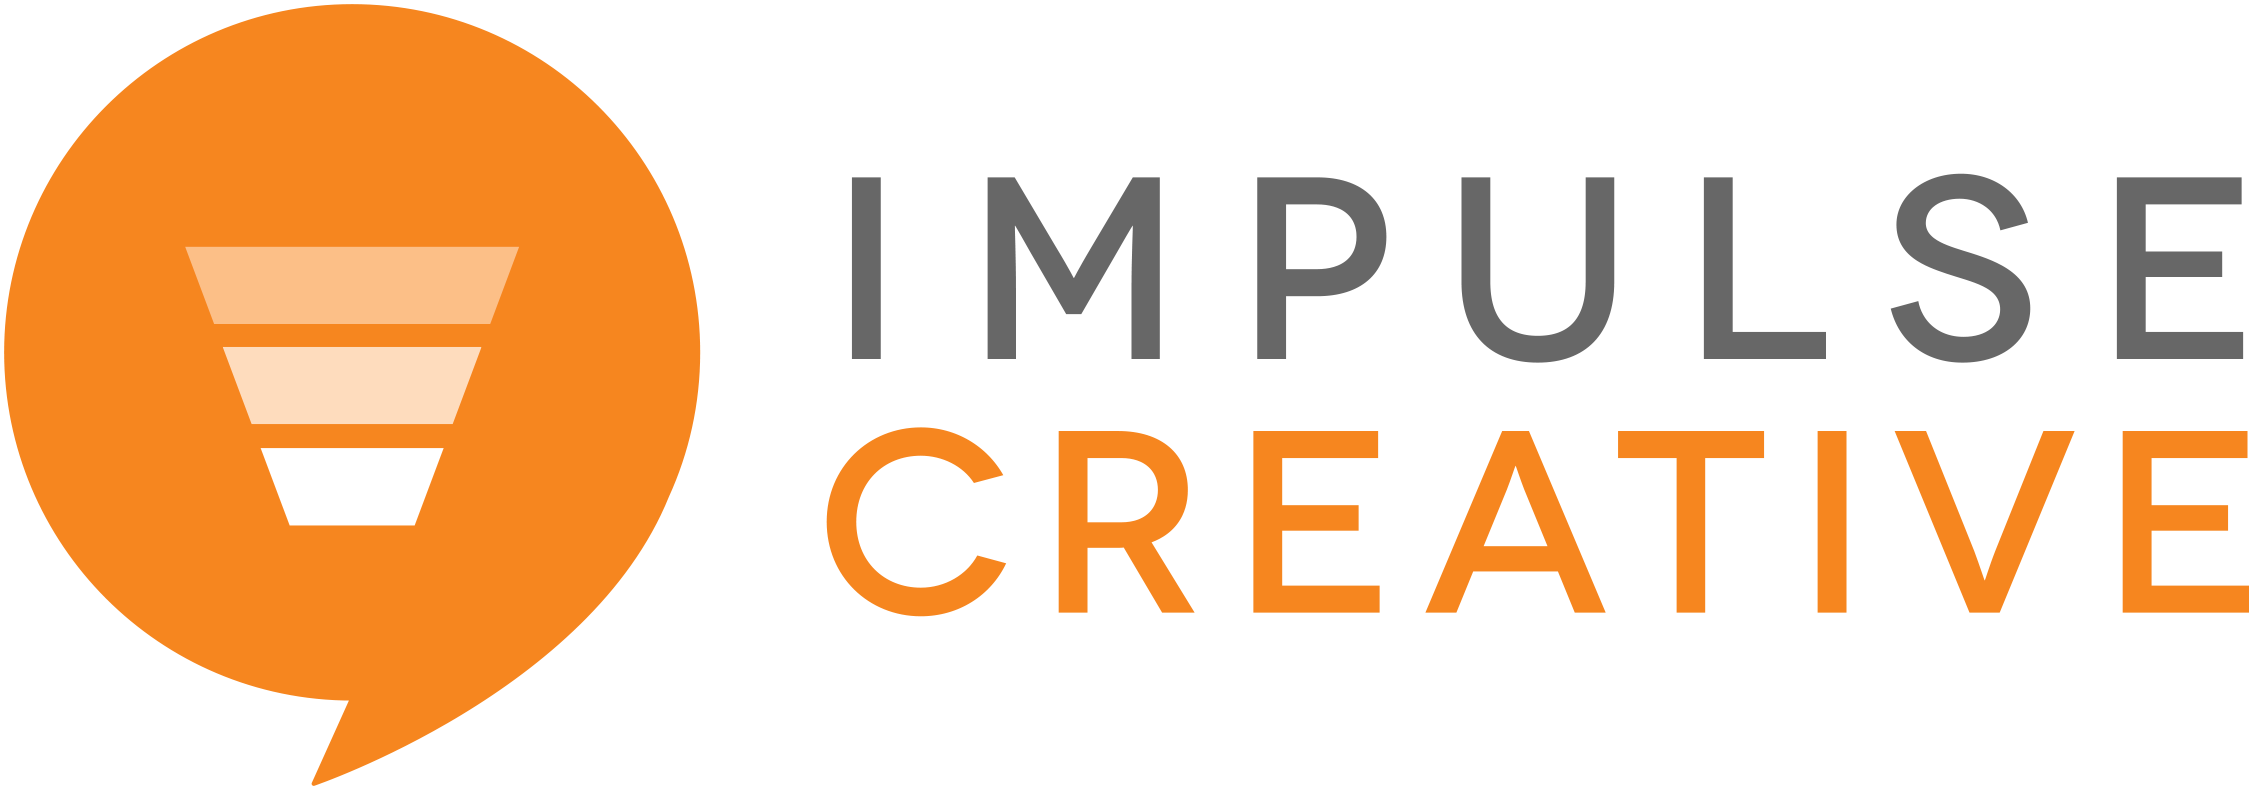 Impulse Creative Logo